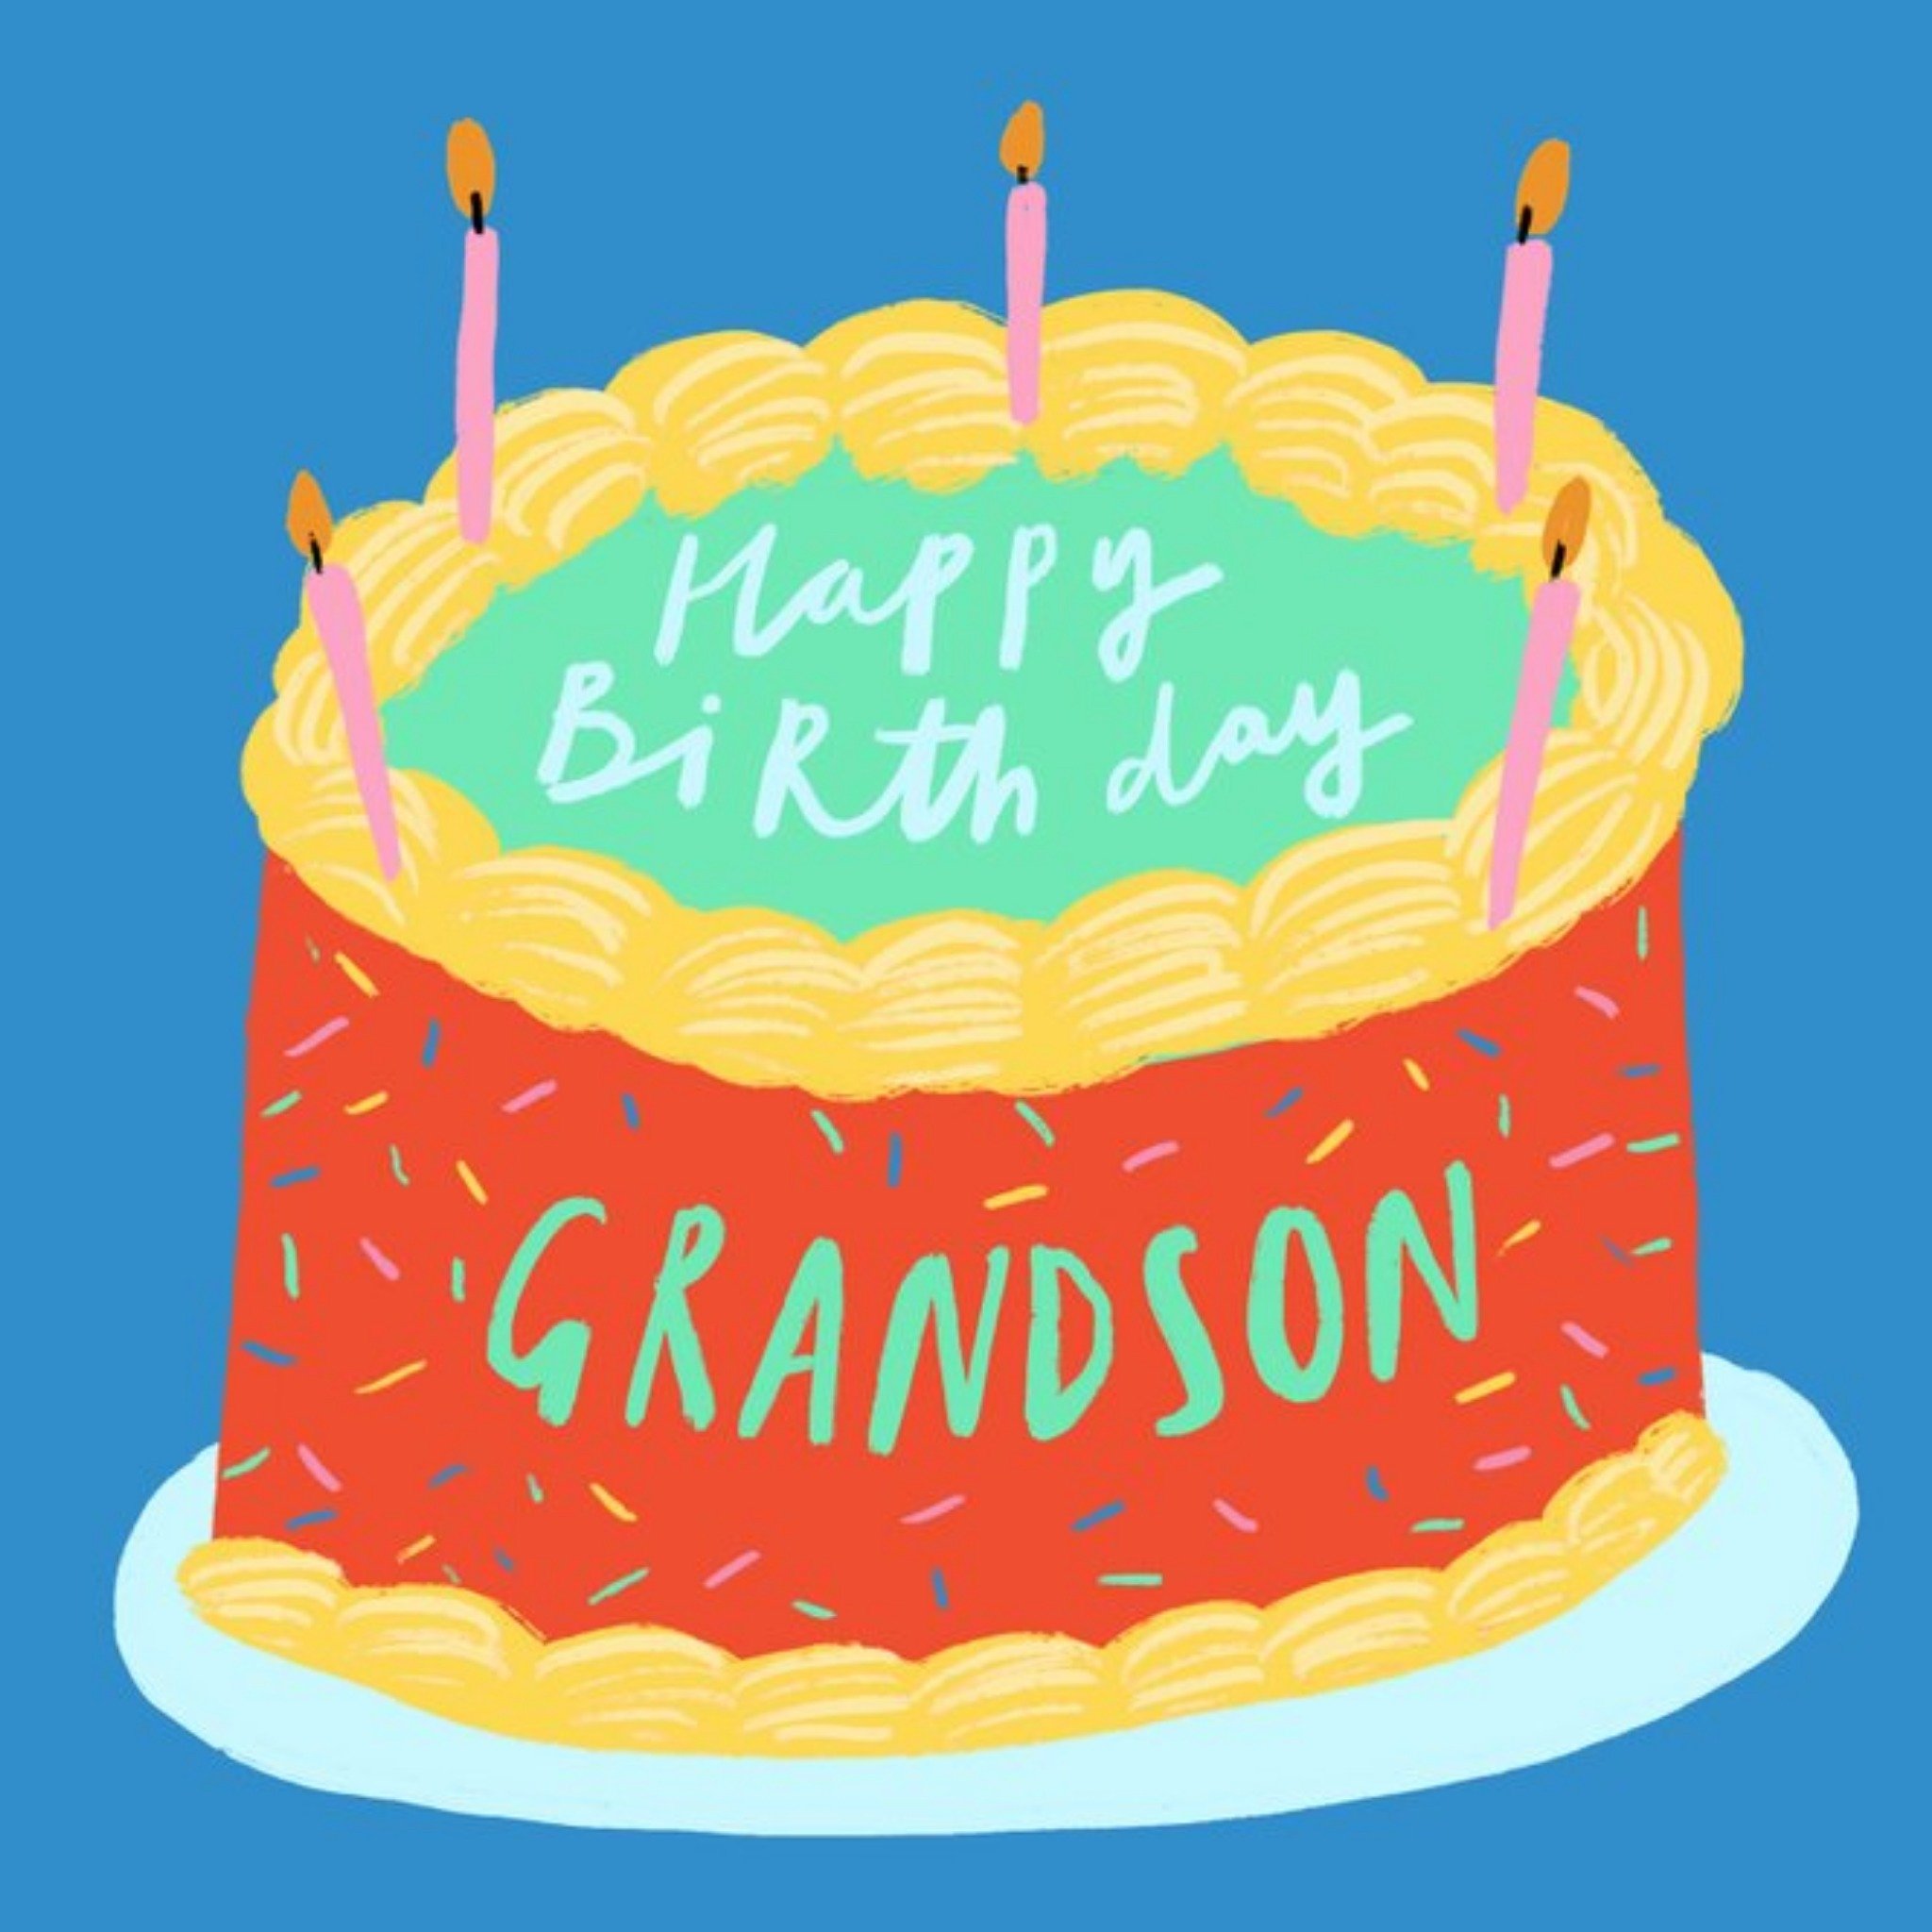 Moonpig Katy Welsh Illustrated Birthday Cake Grandson Card, Large